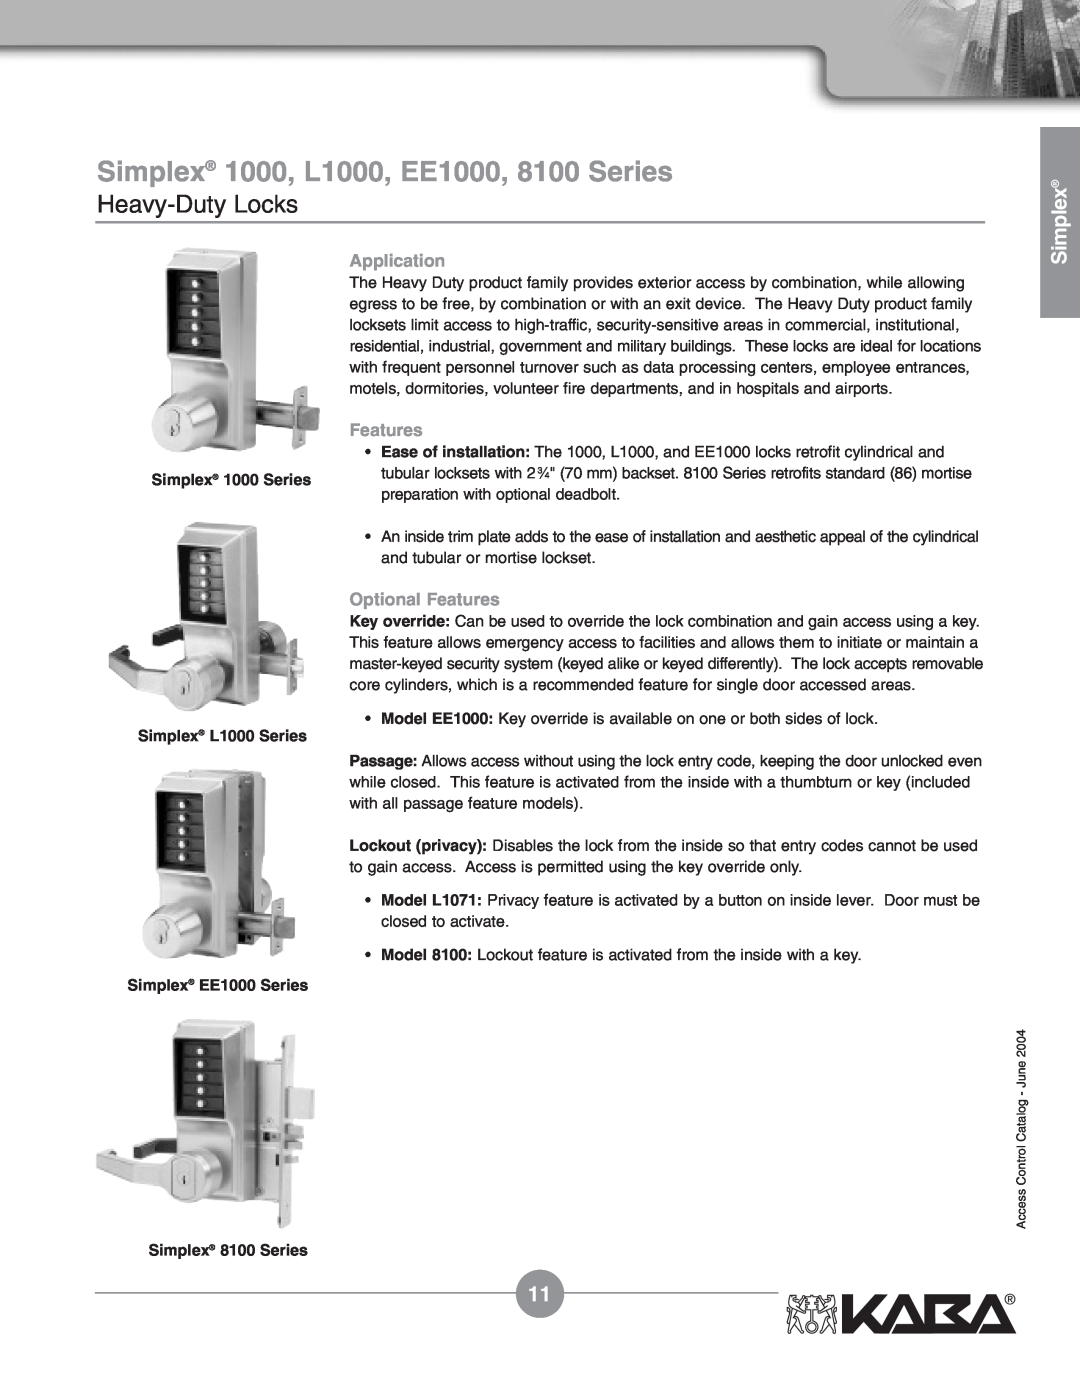 Assa Mechanical Pushbutton Locks manual Simplex 1000, L1000, EE1000, 8100 Series, Heavy-Duty Locks, Application, Features 